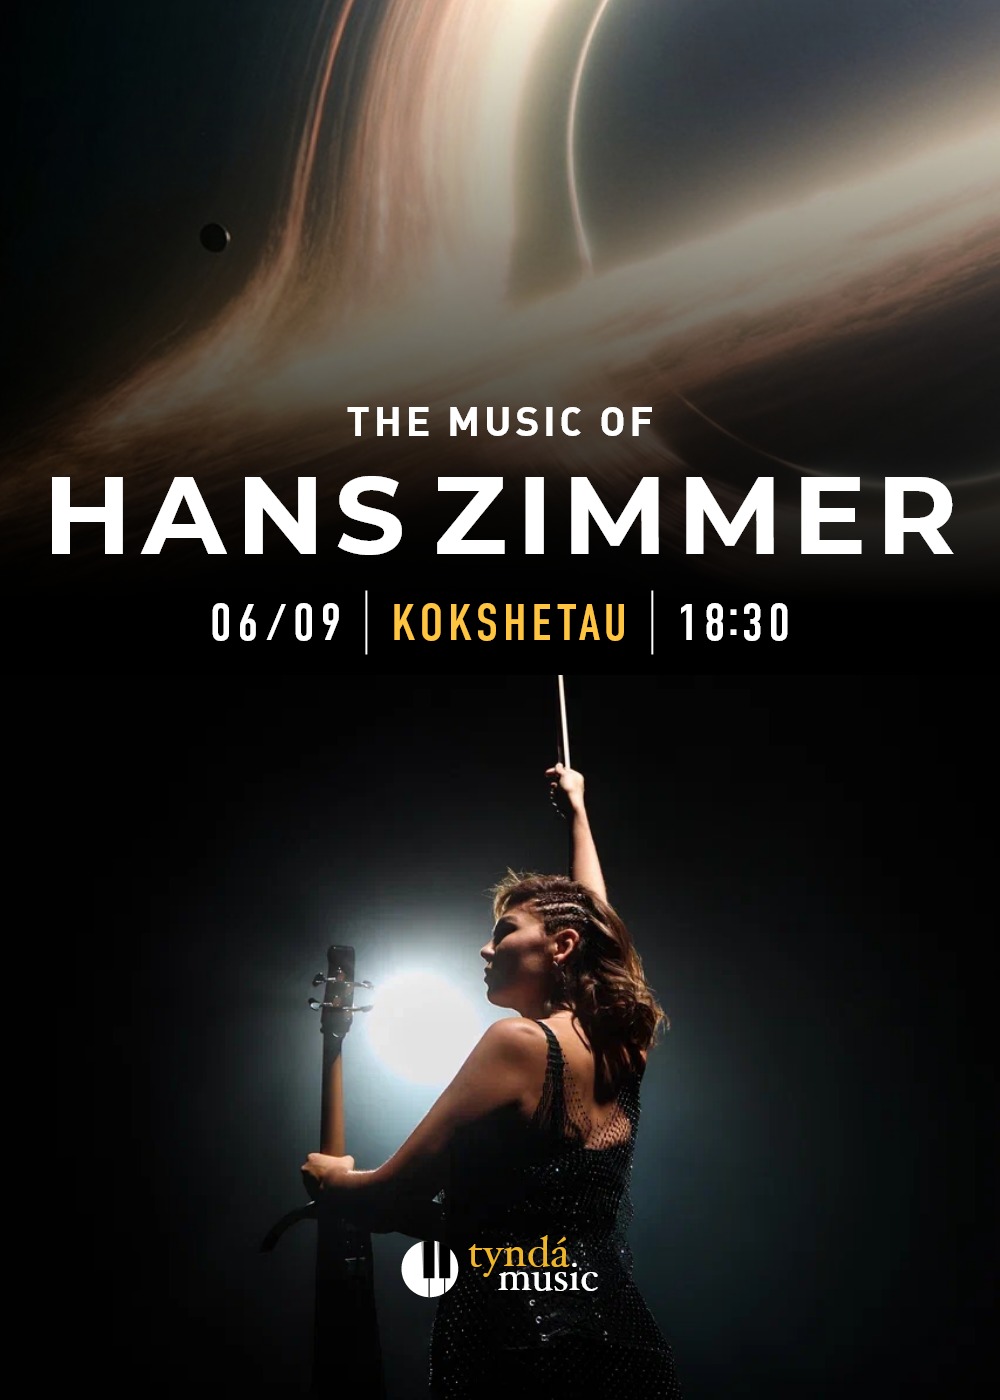 The world of Hans Zimmer в Кокшетау